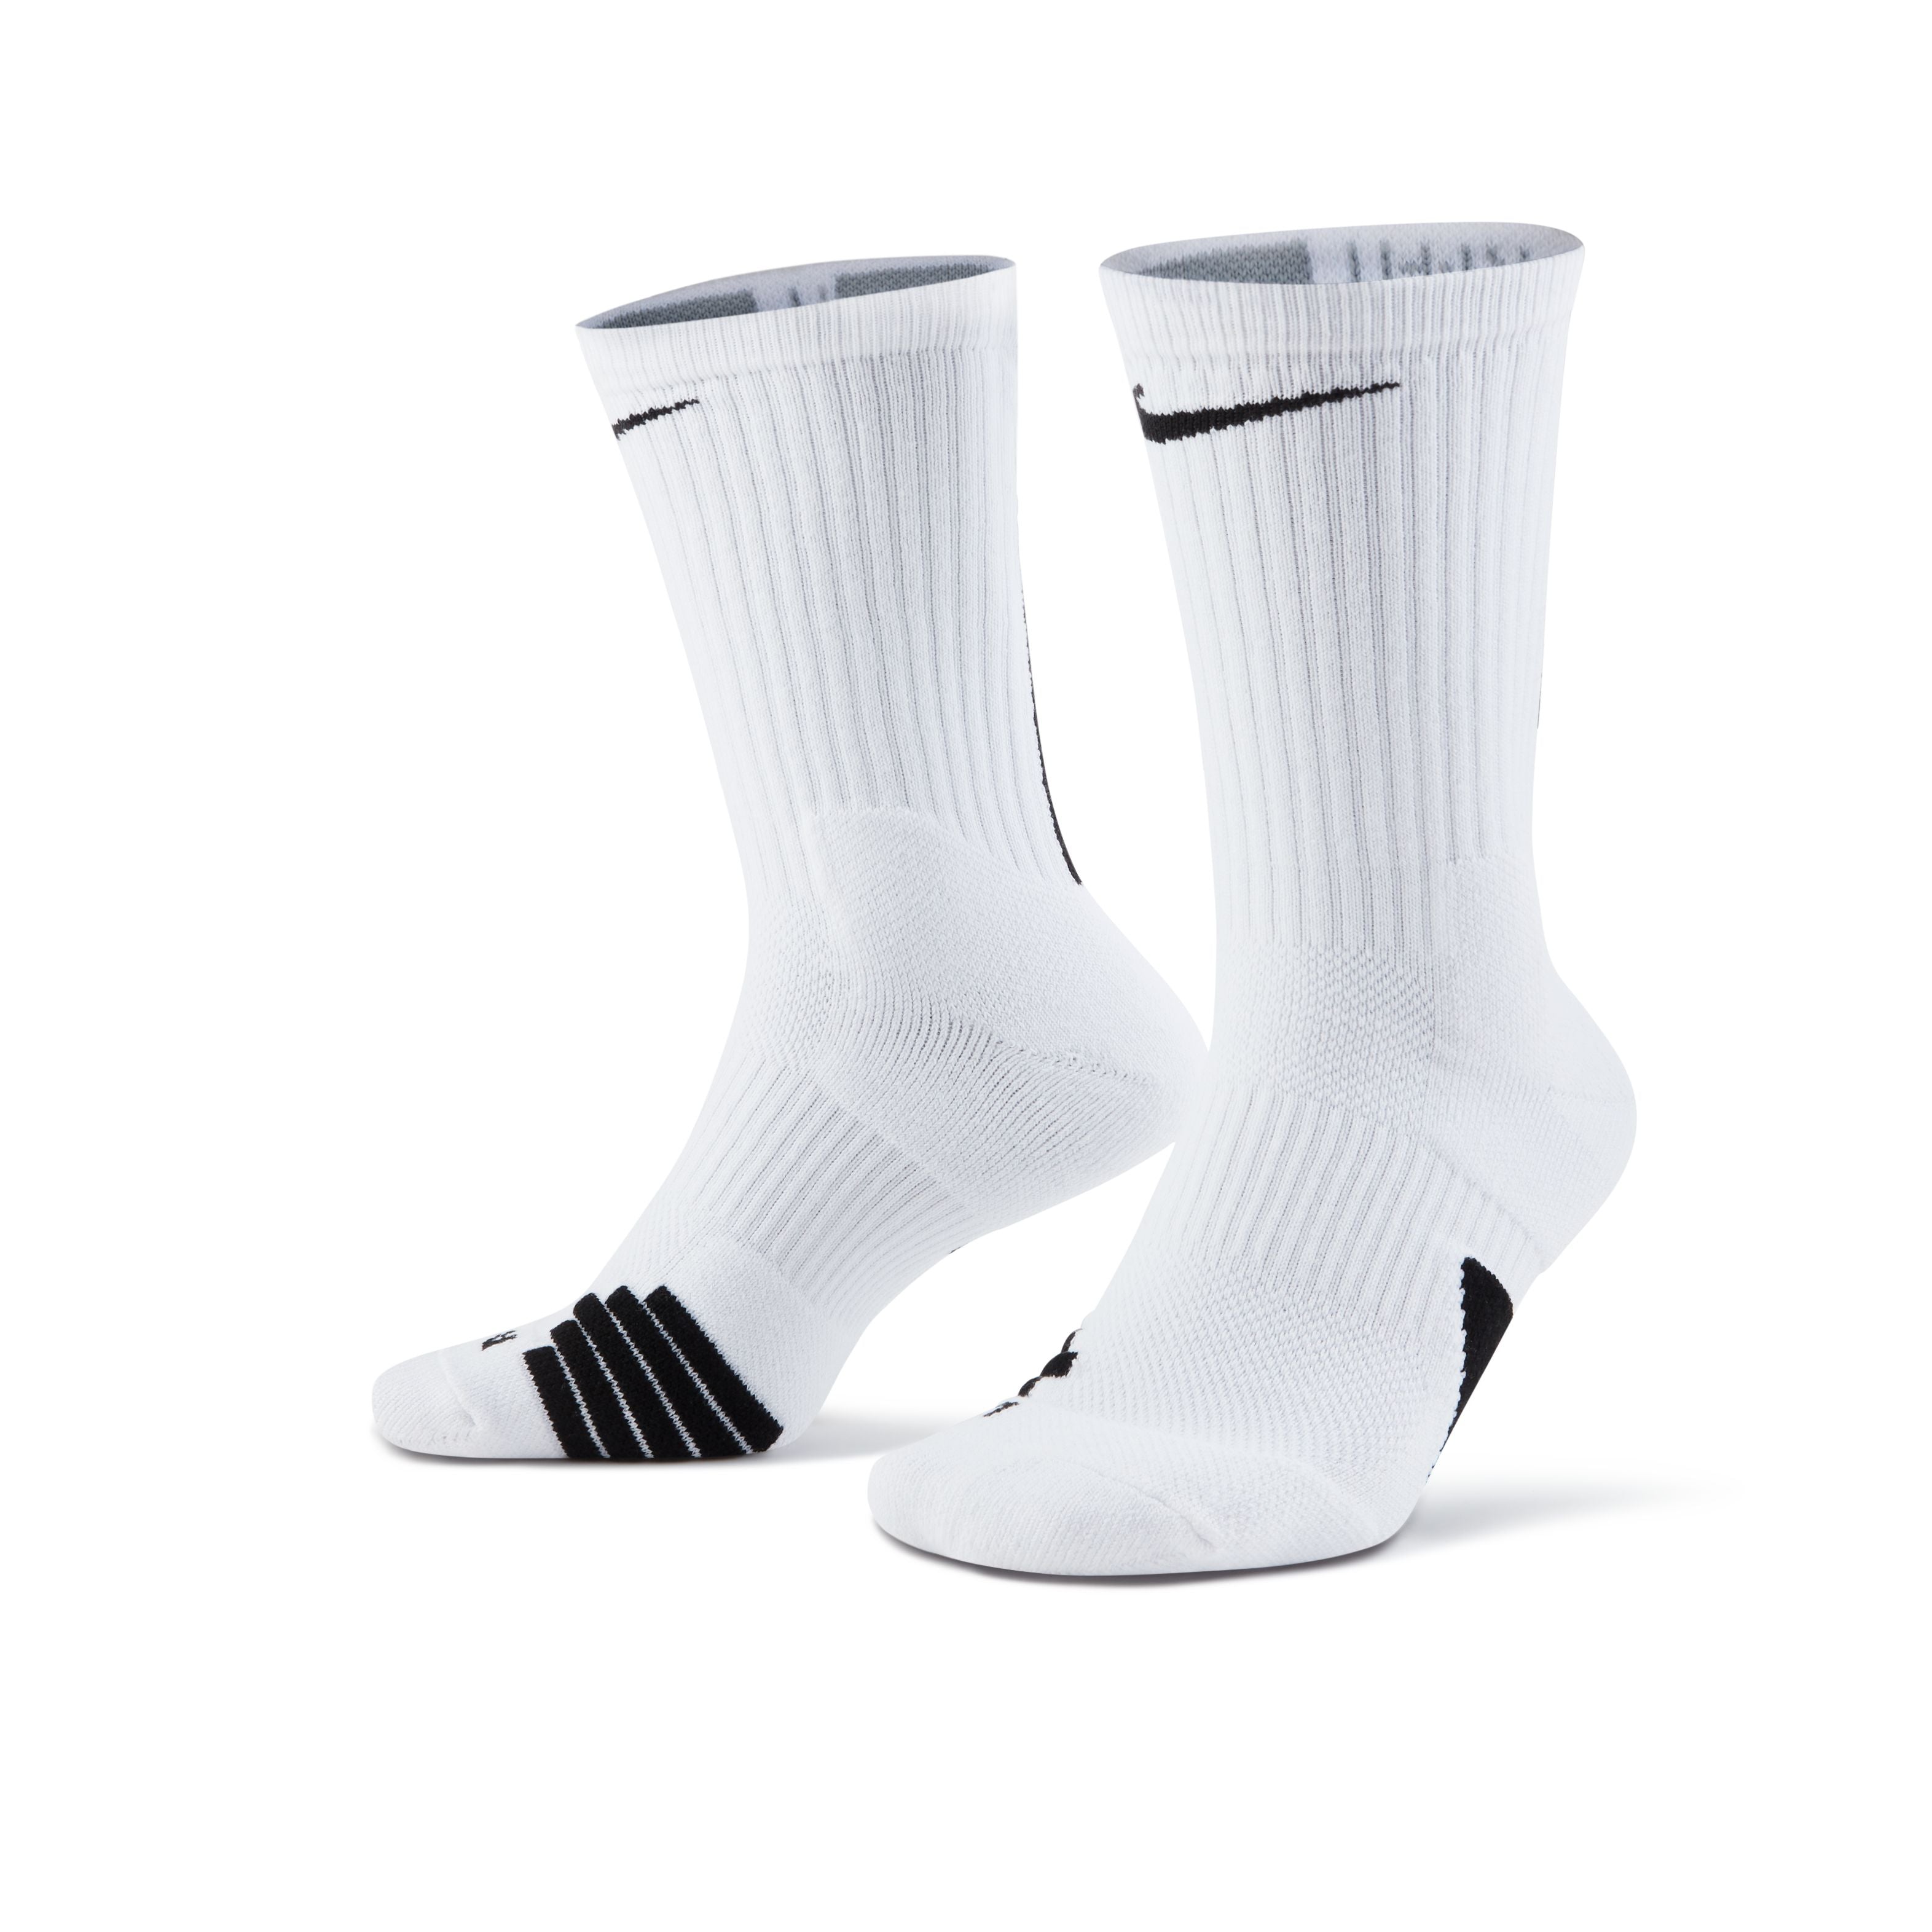 Nike Vapor 3.0 Football Crew Socks